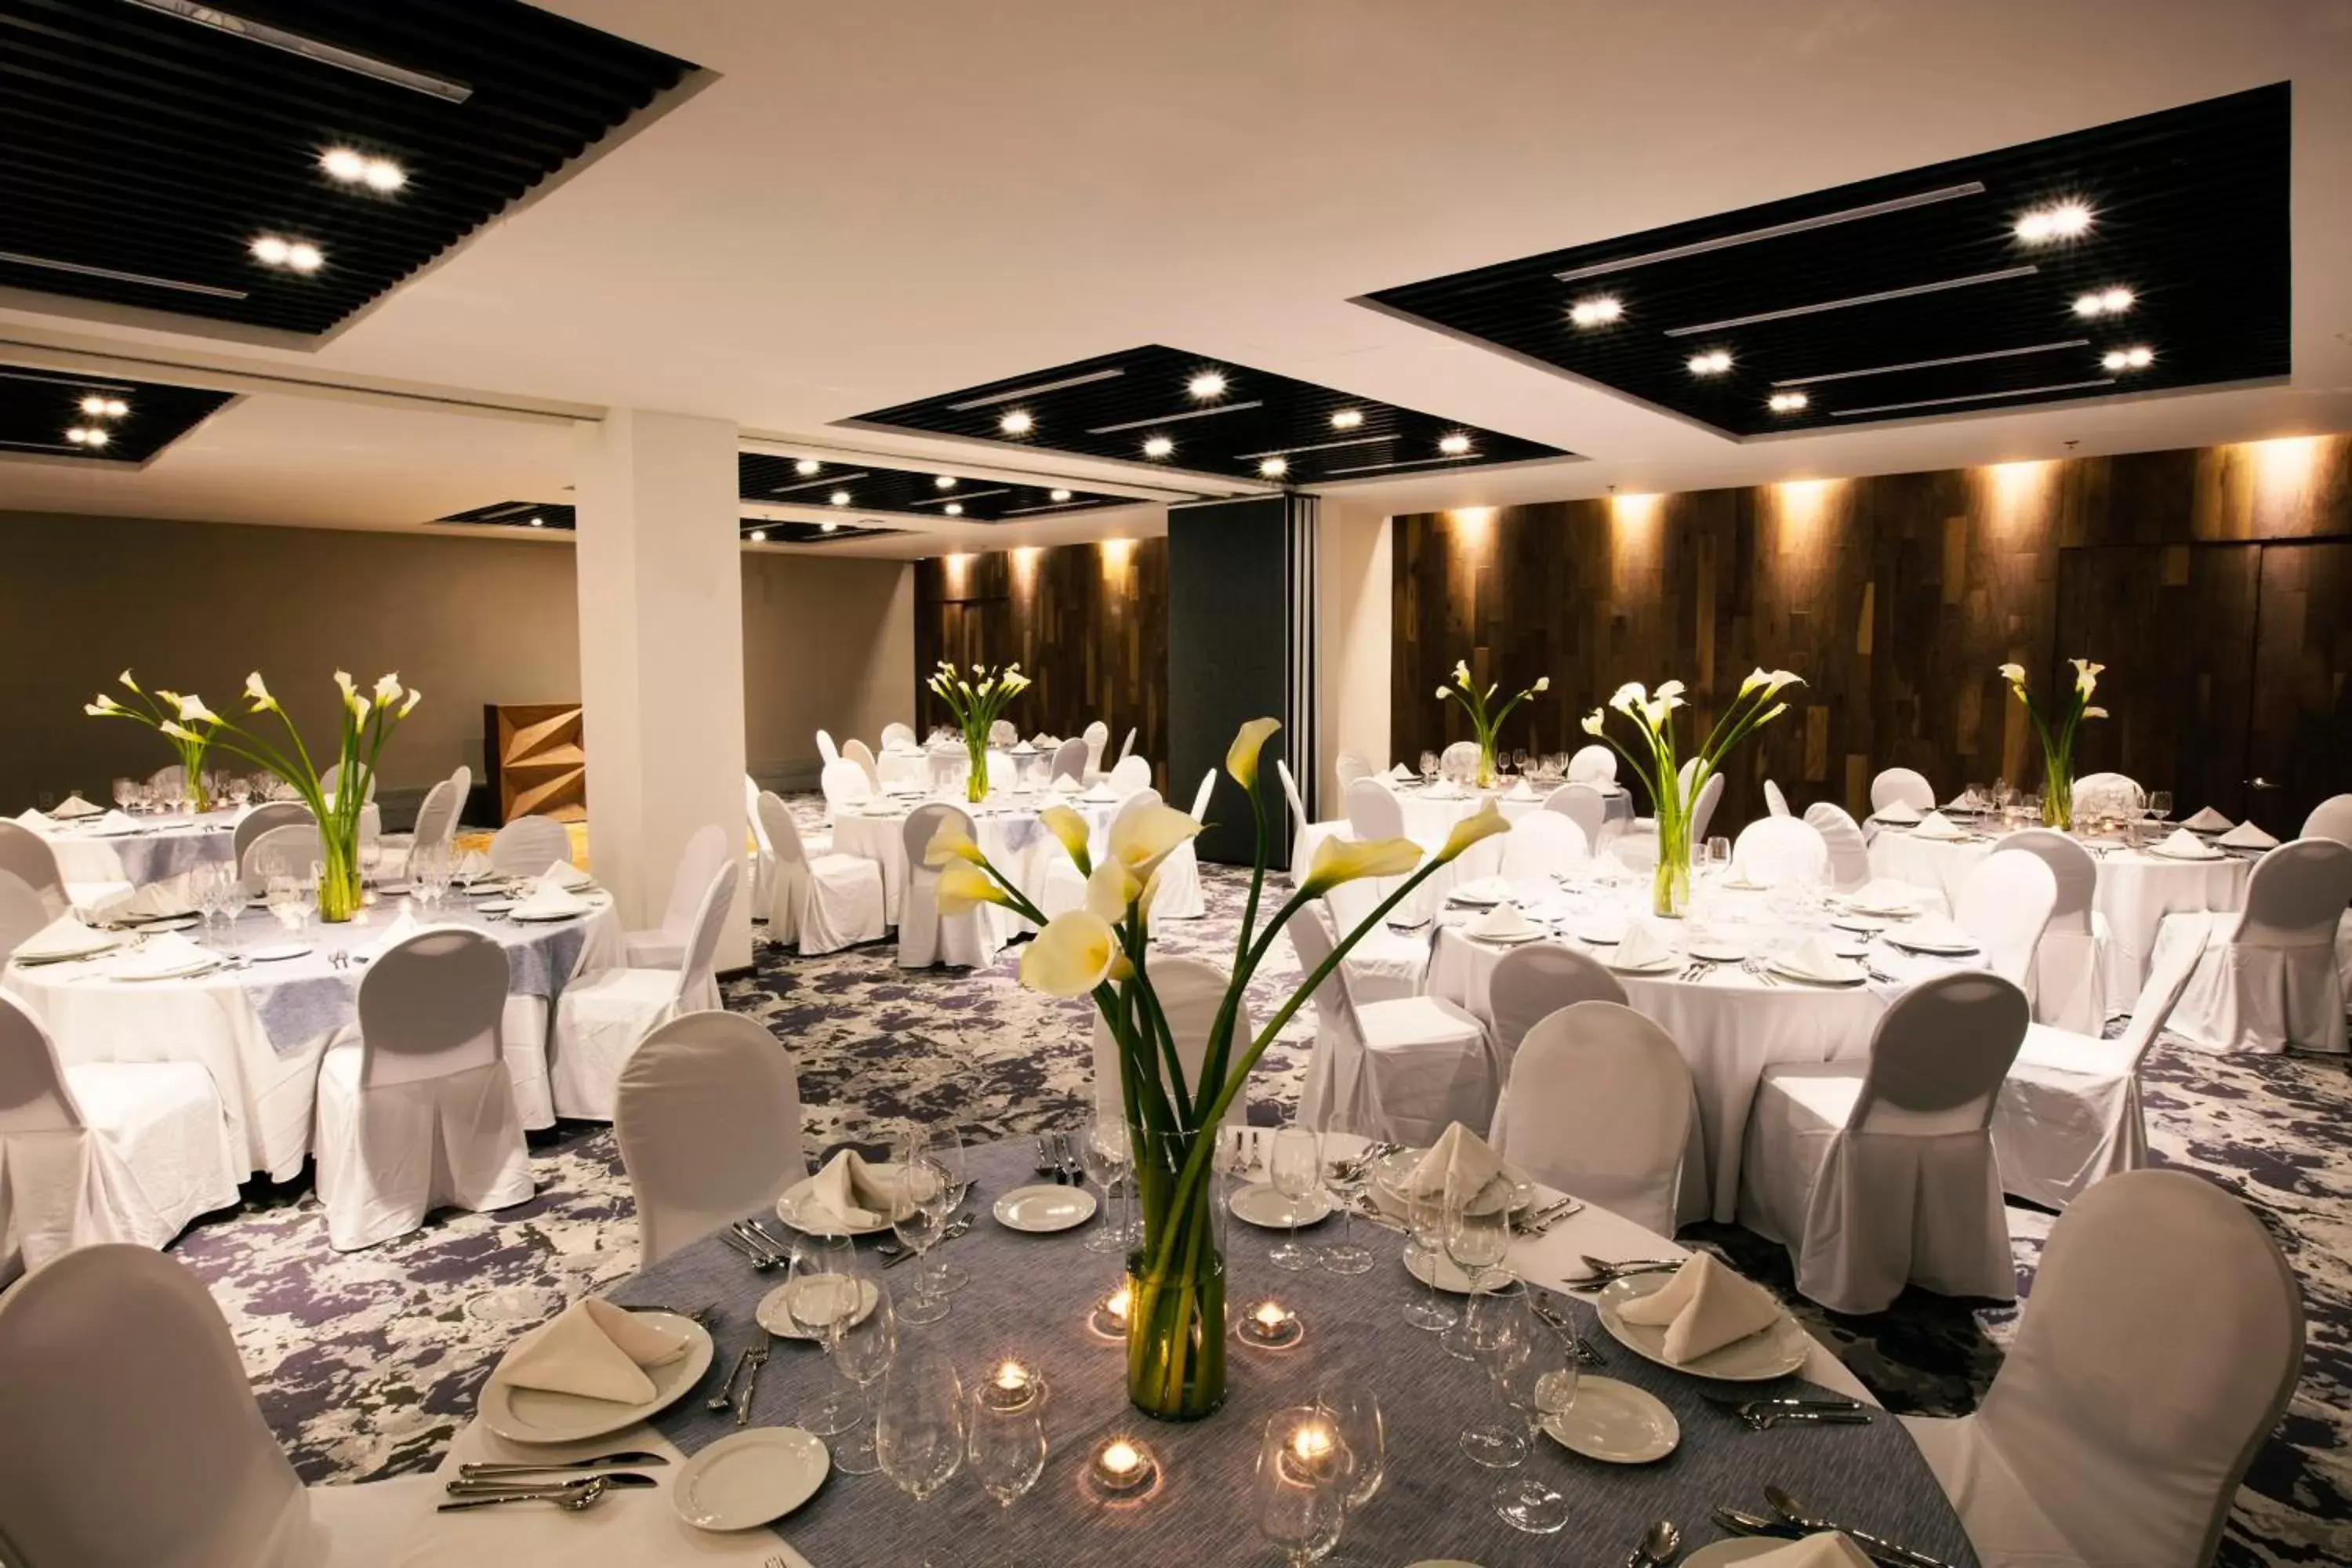 Banquet/Function facilities, Banquet Facilities in Krystal Grand Suites Insurgentes